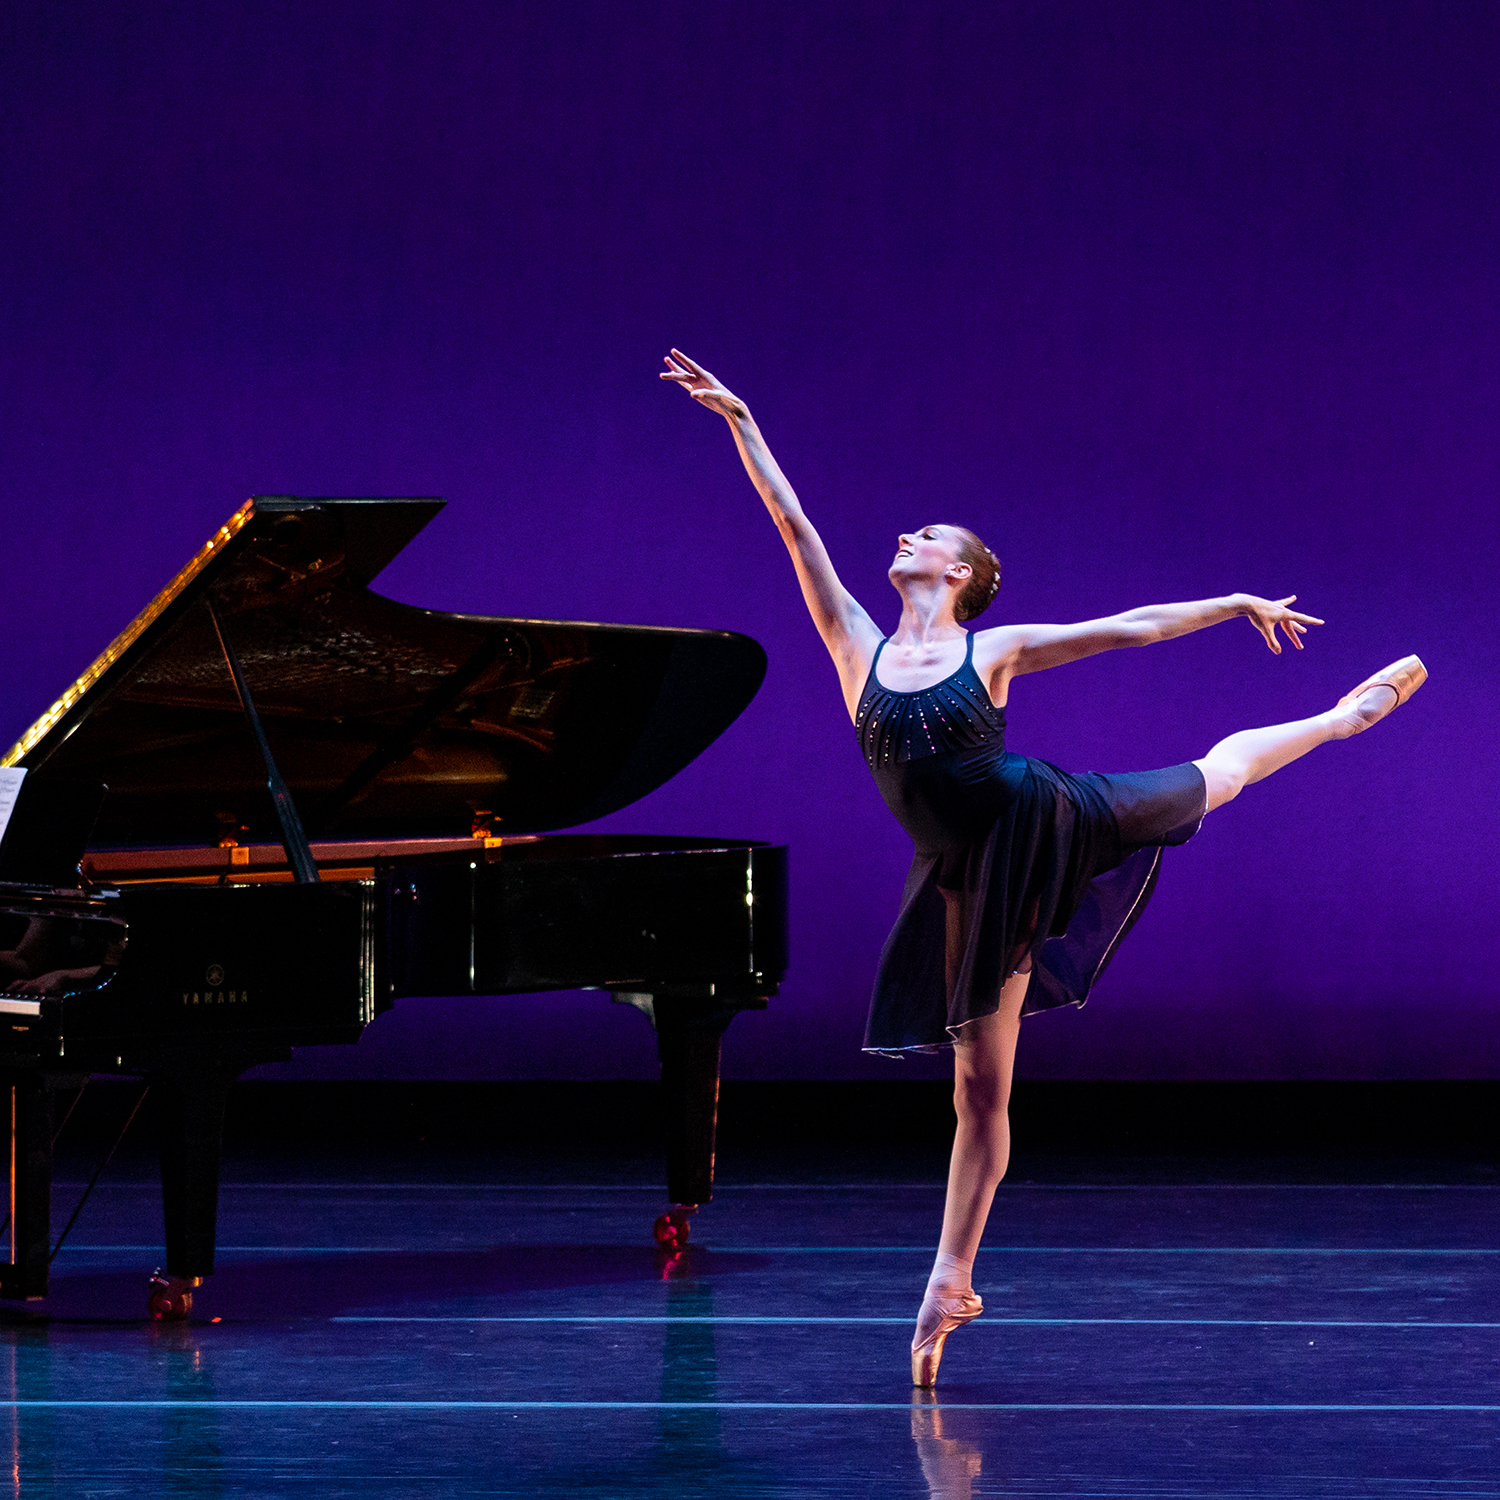 A ballerina dances near a grand piano on stage